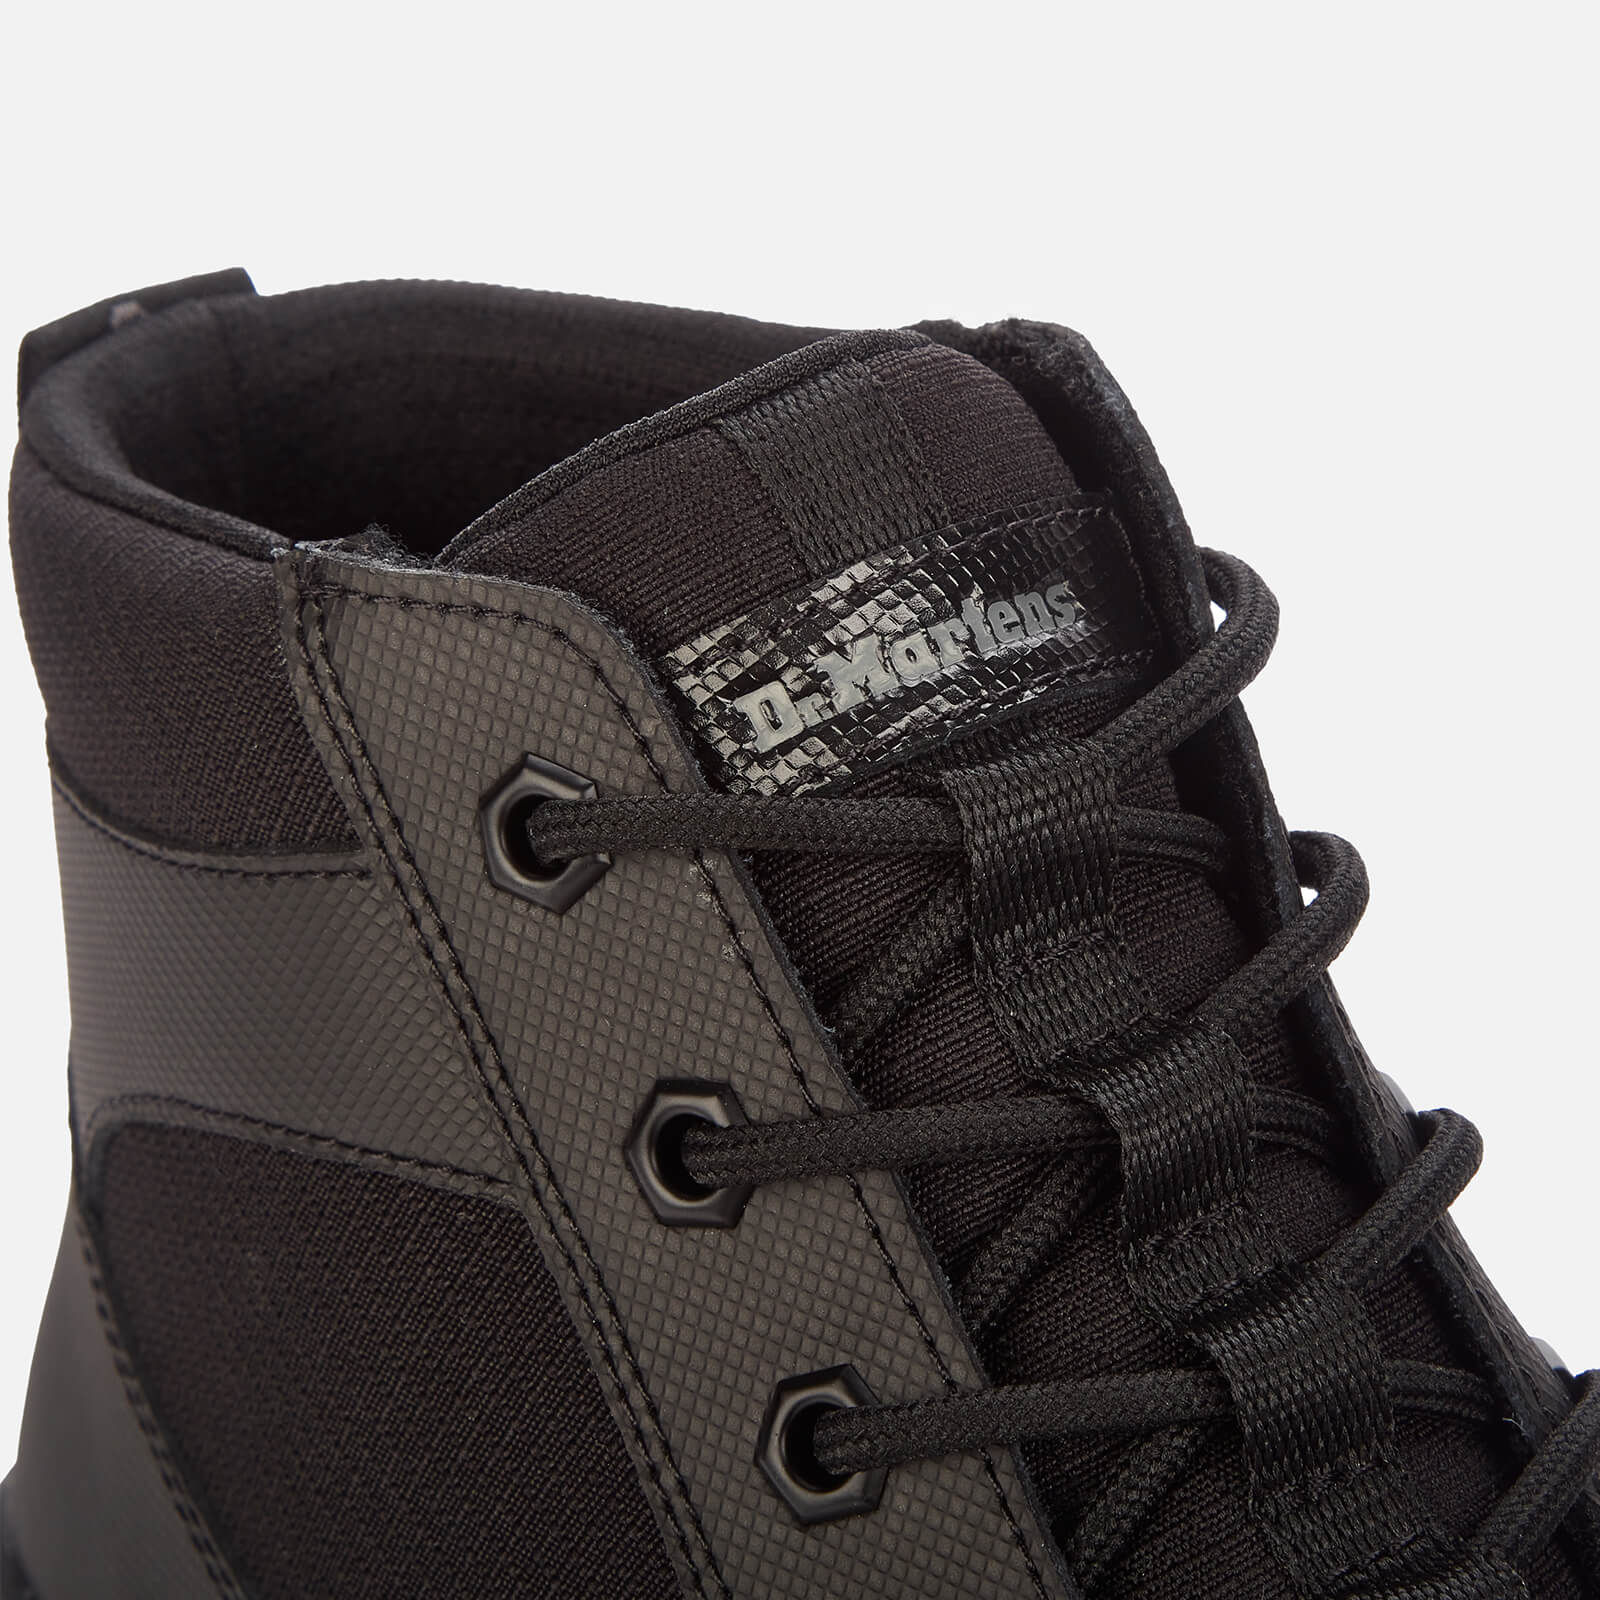 Dr. Martens Bonny Extra Tough Nylon Chukka Boots - Black - Uk 8 20377001 Womens Footwear, Black